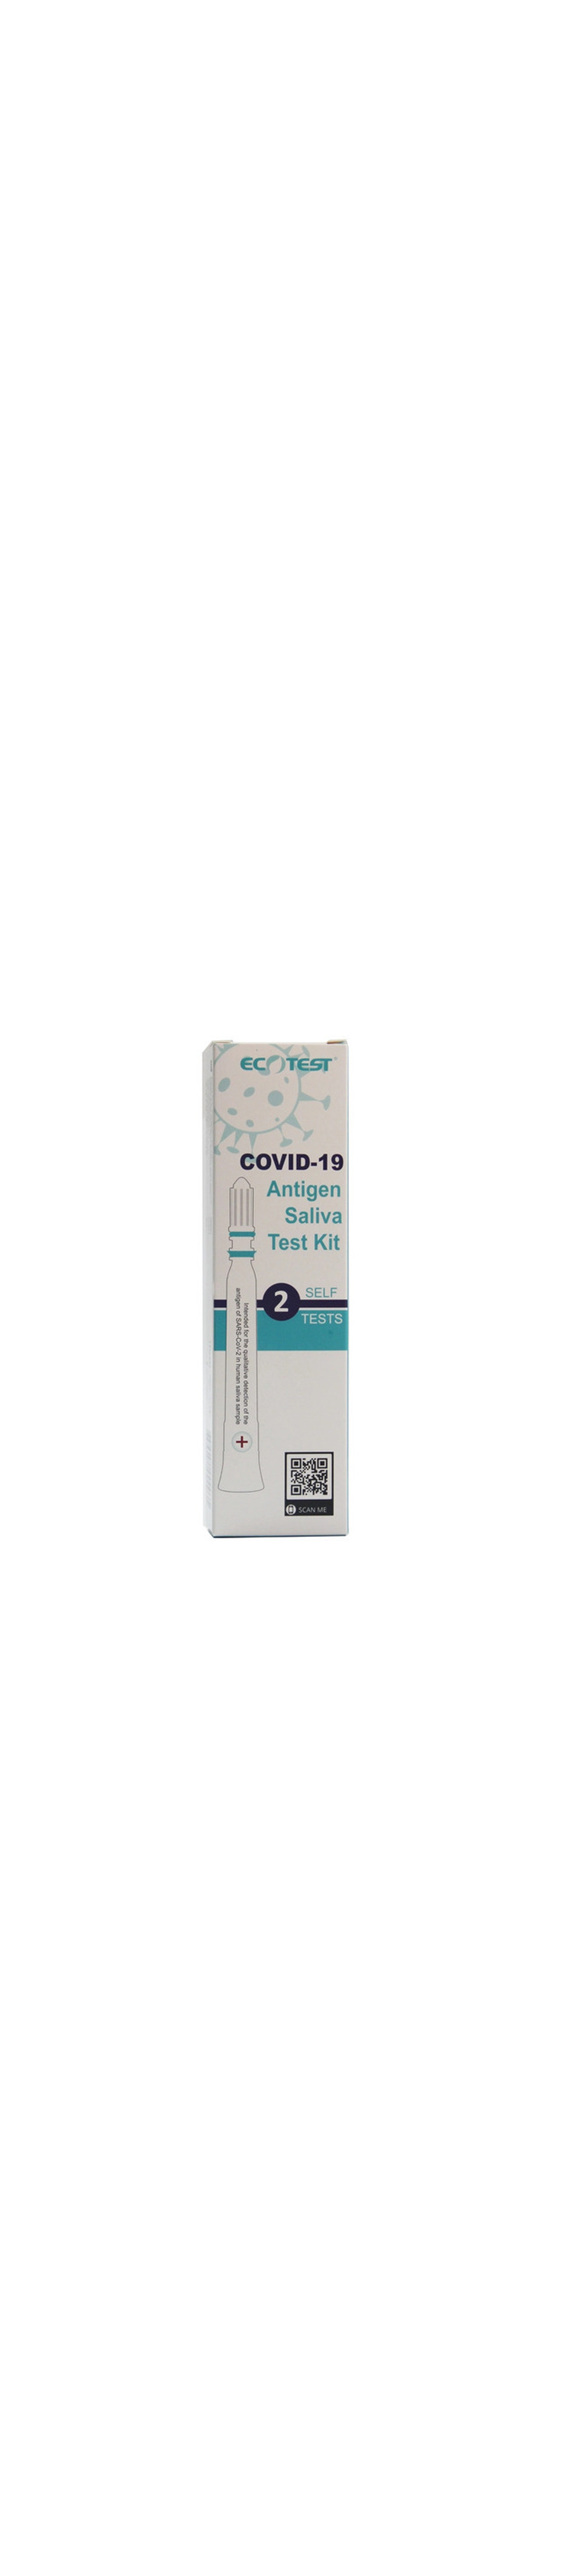 Ecotest COVID-19 Rapid Antigen Saliva Test Pen